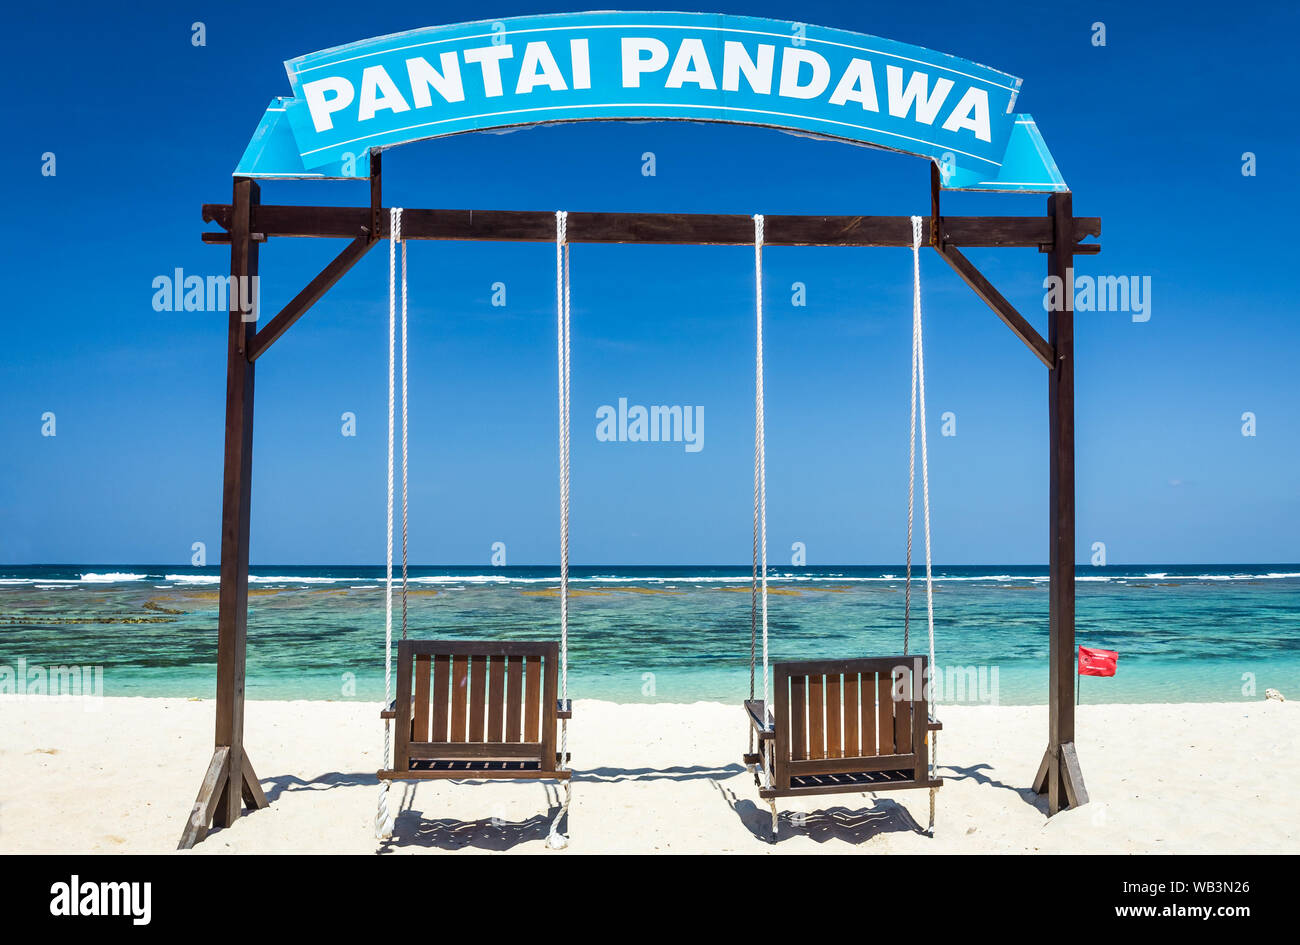 Patnai Pandawa beach sceneryon Bali island, Indonesia Stock Photo